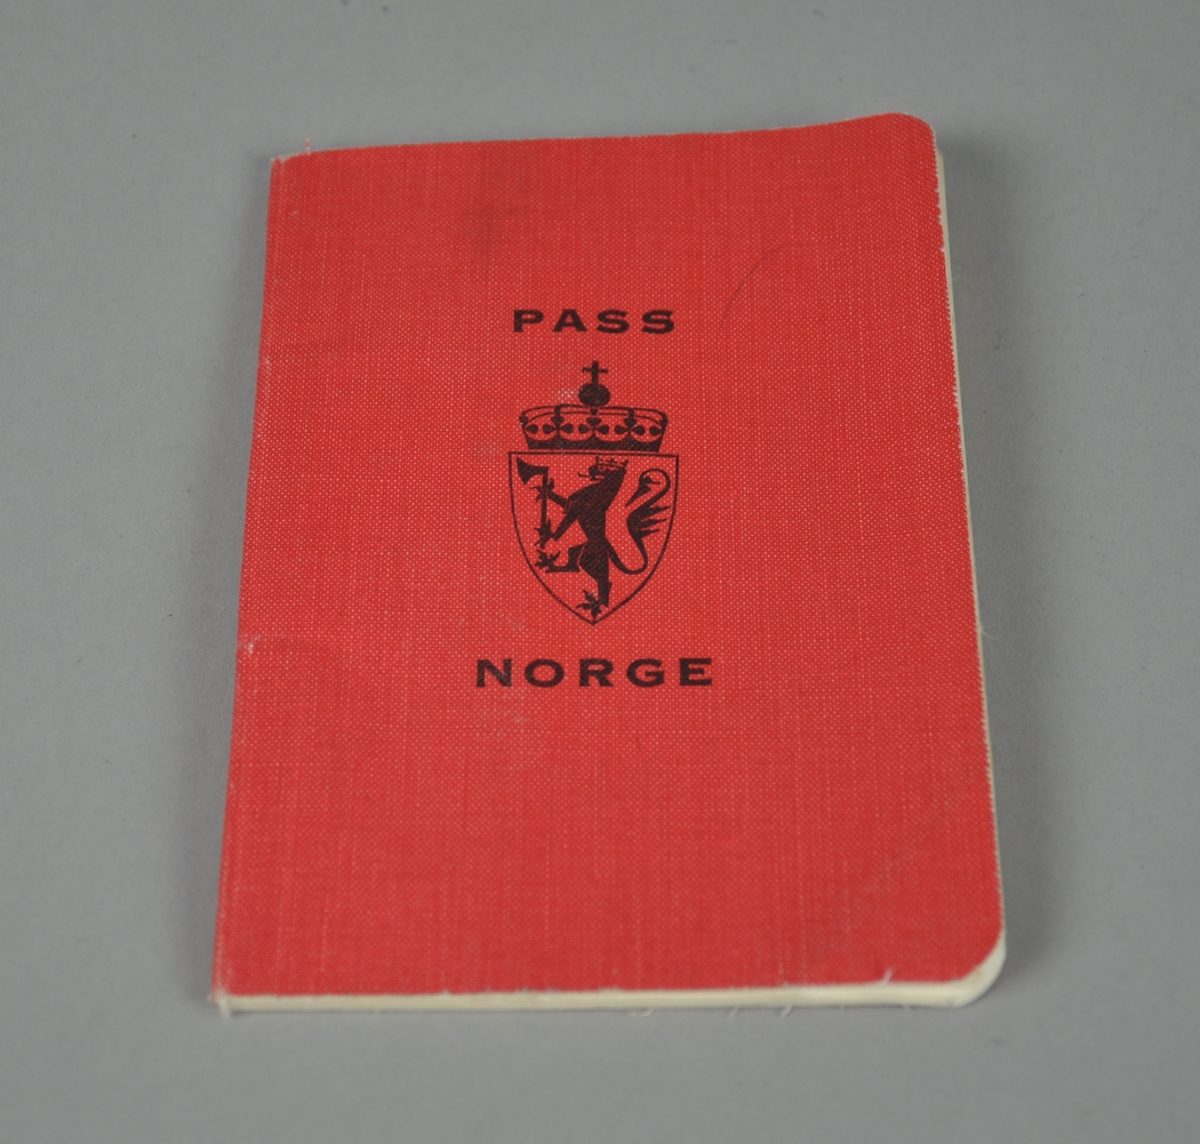 Norsk pass av rødfarget papir.